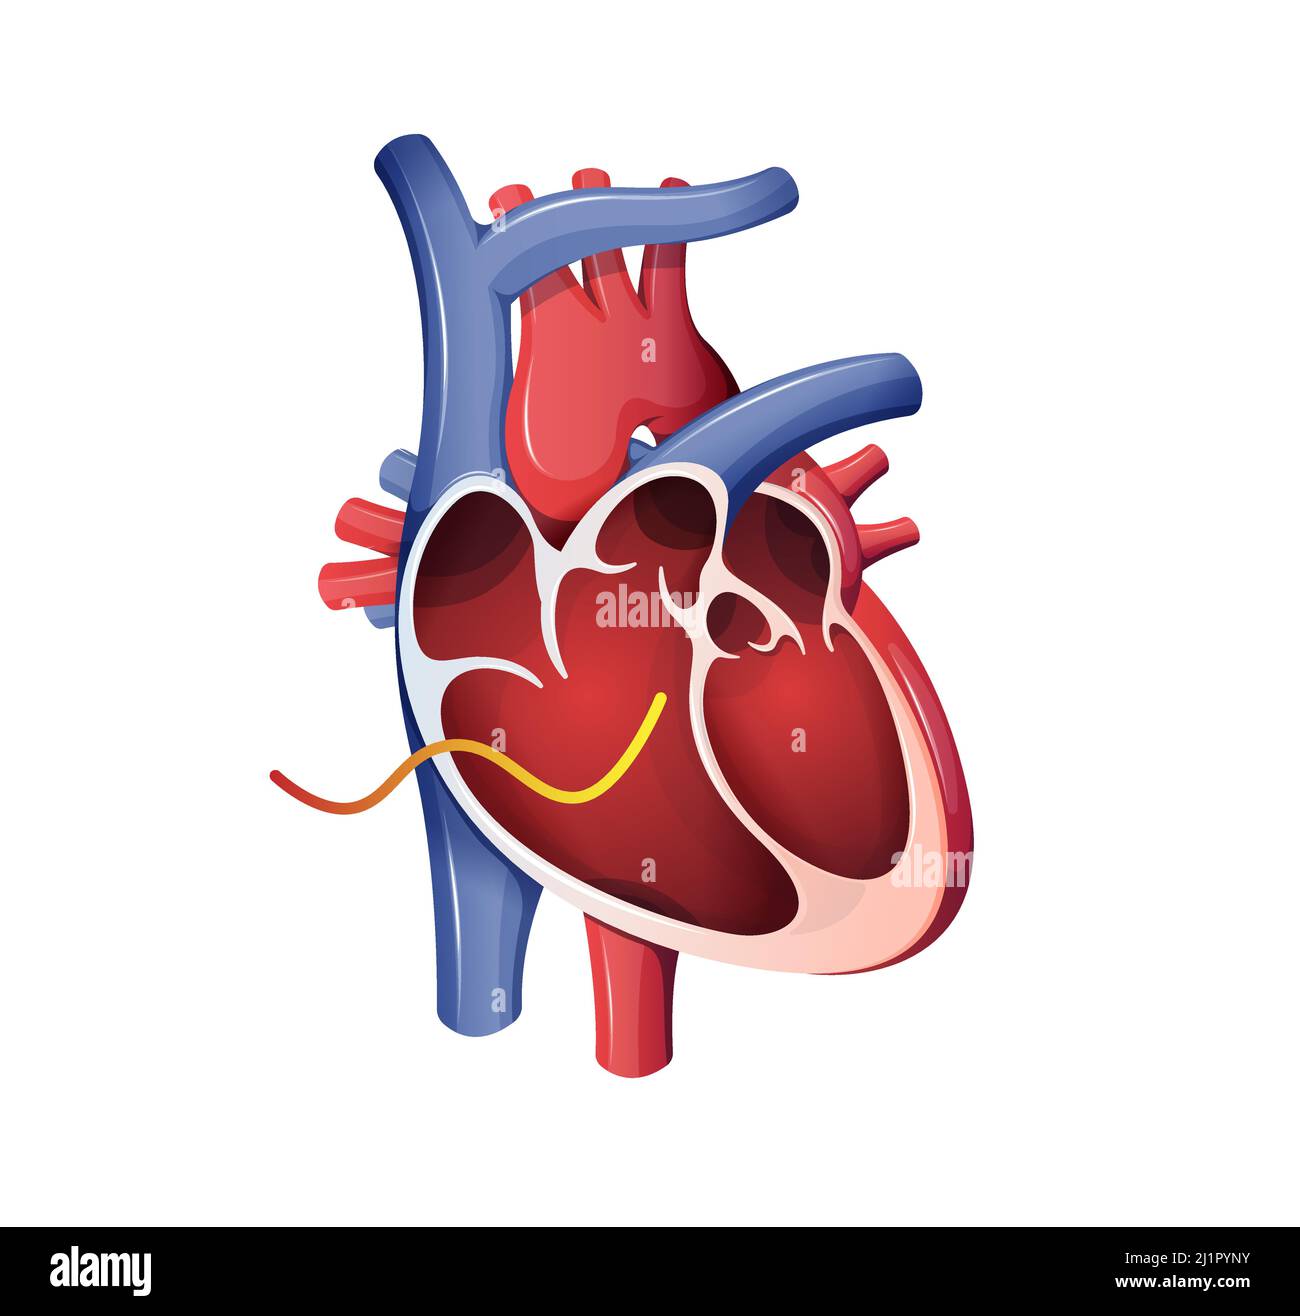 Human Heart Cross Section - Stock Illustration as EPS 10 File Stock Vector